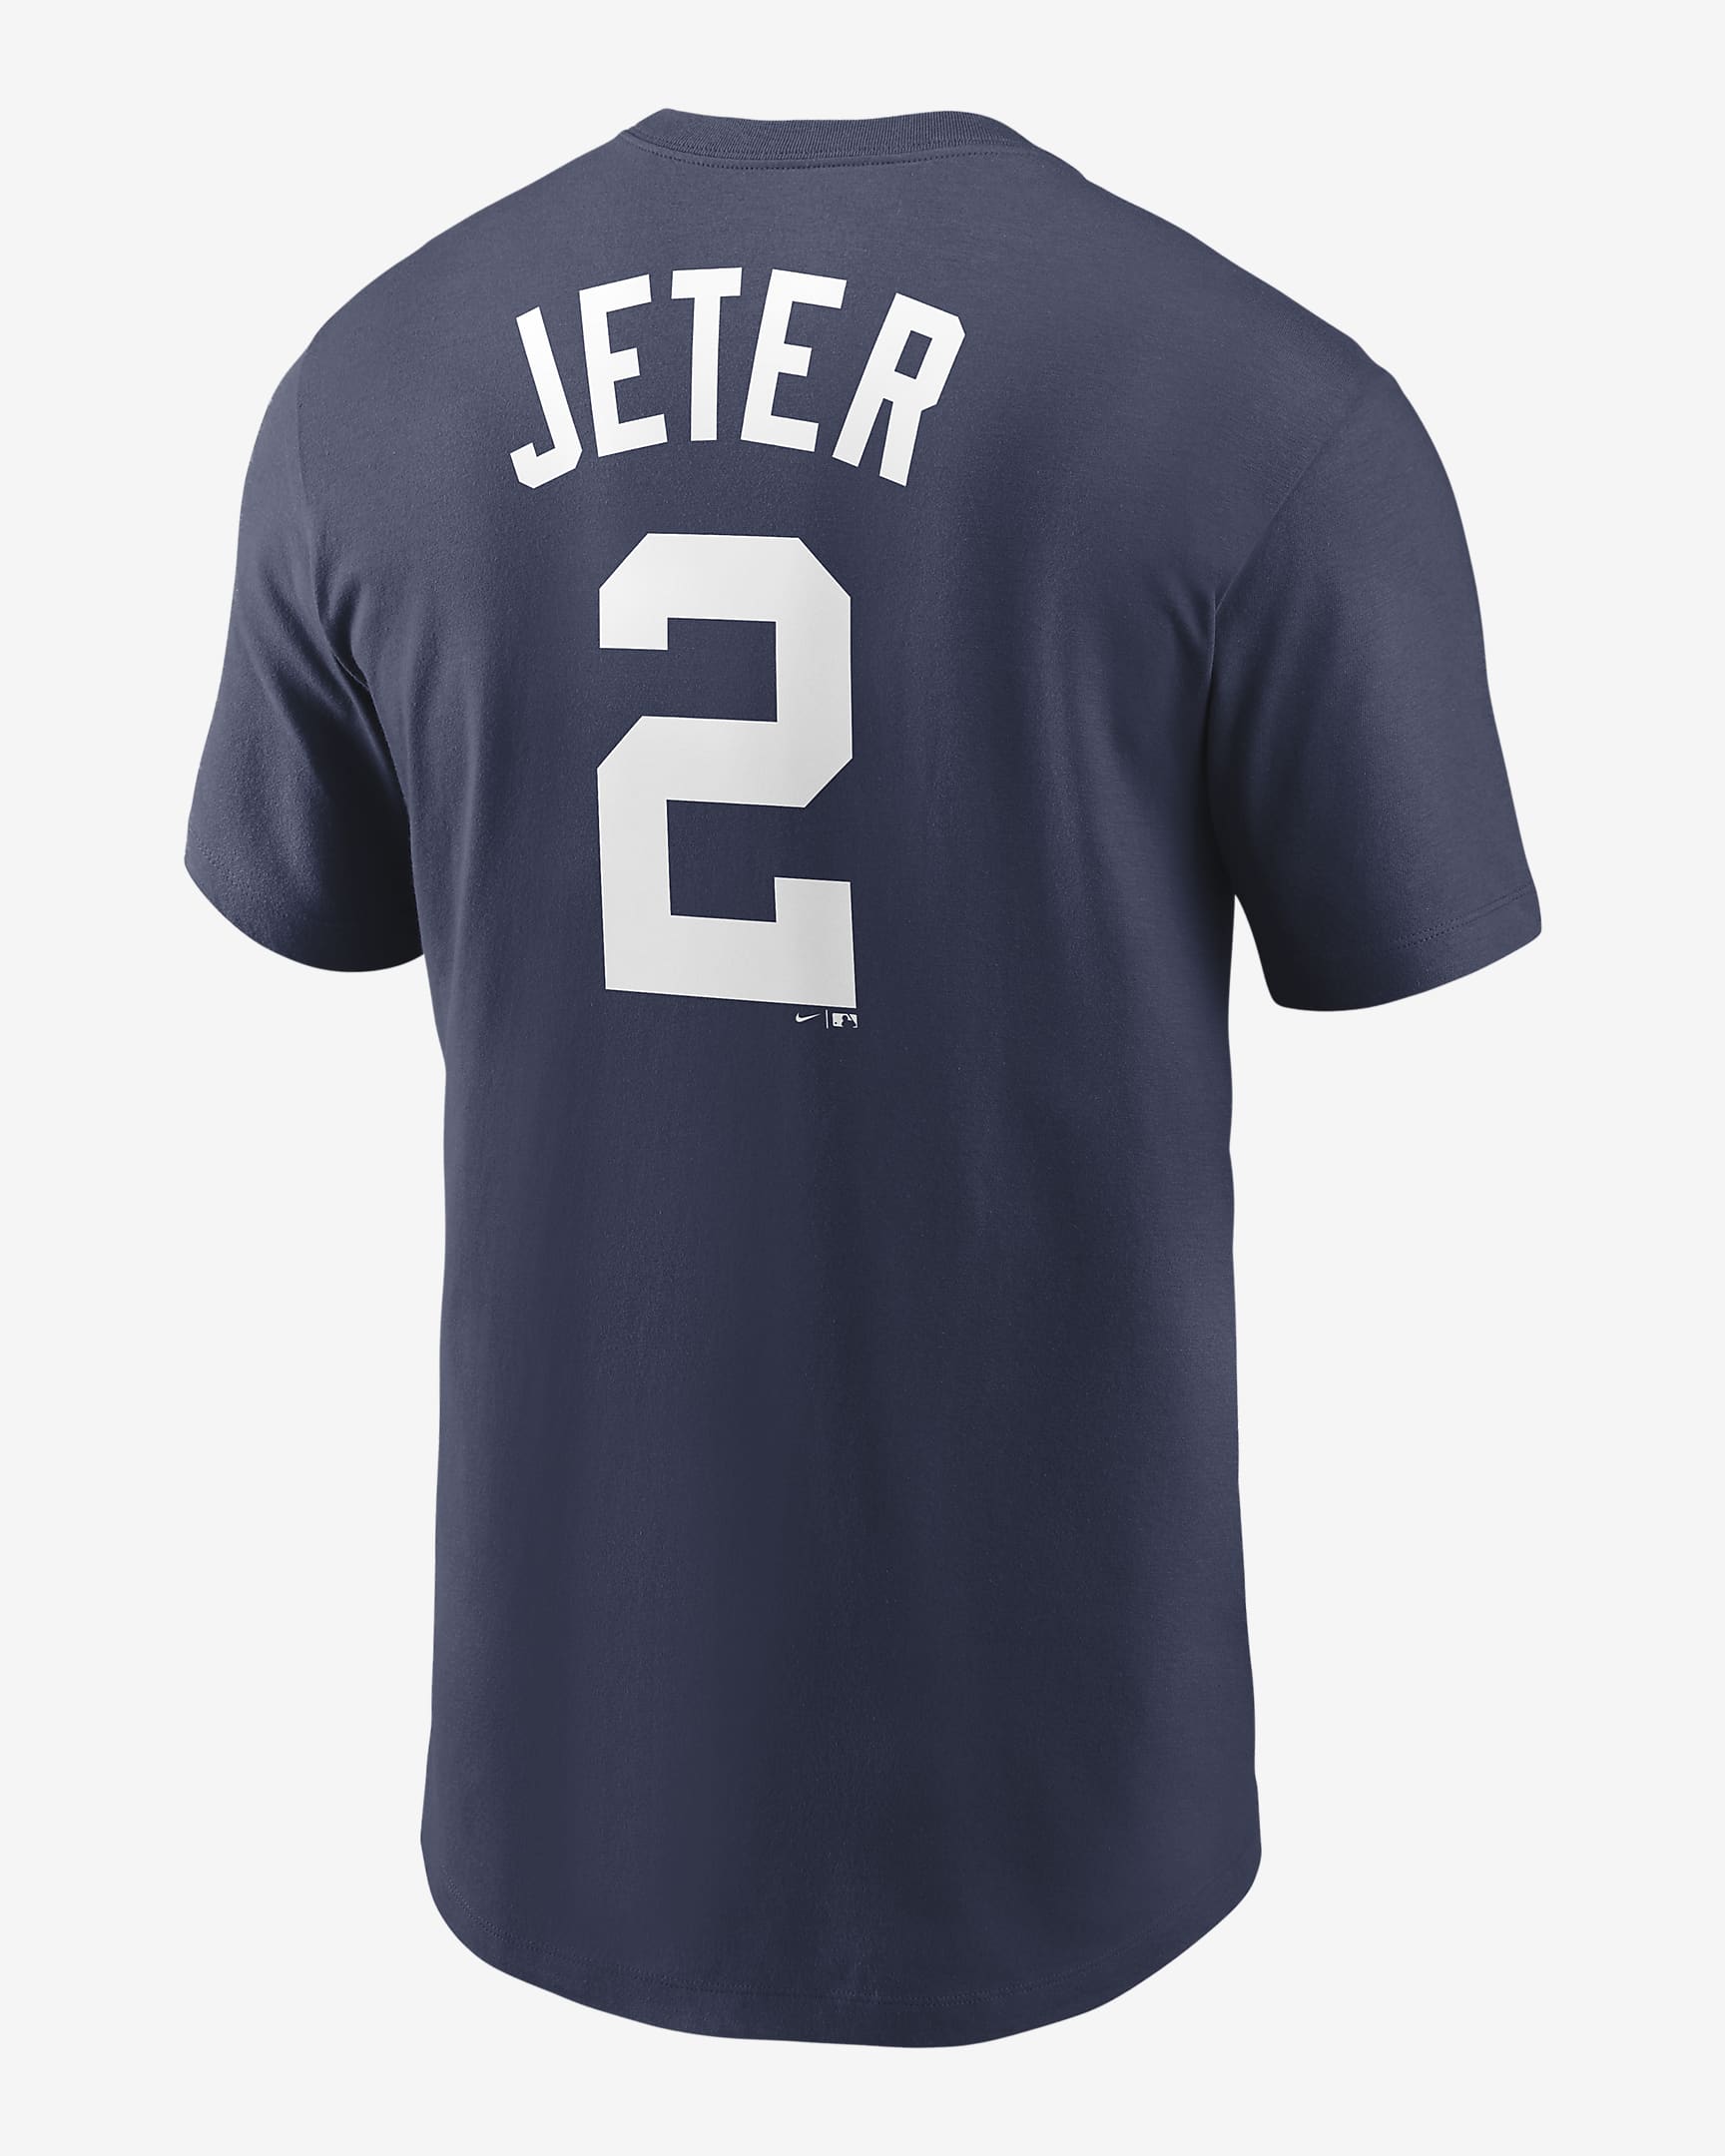 Playera para niño talla grande MLB New York Yankees (Derek Jeter). Nike.com